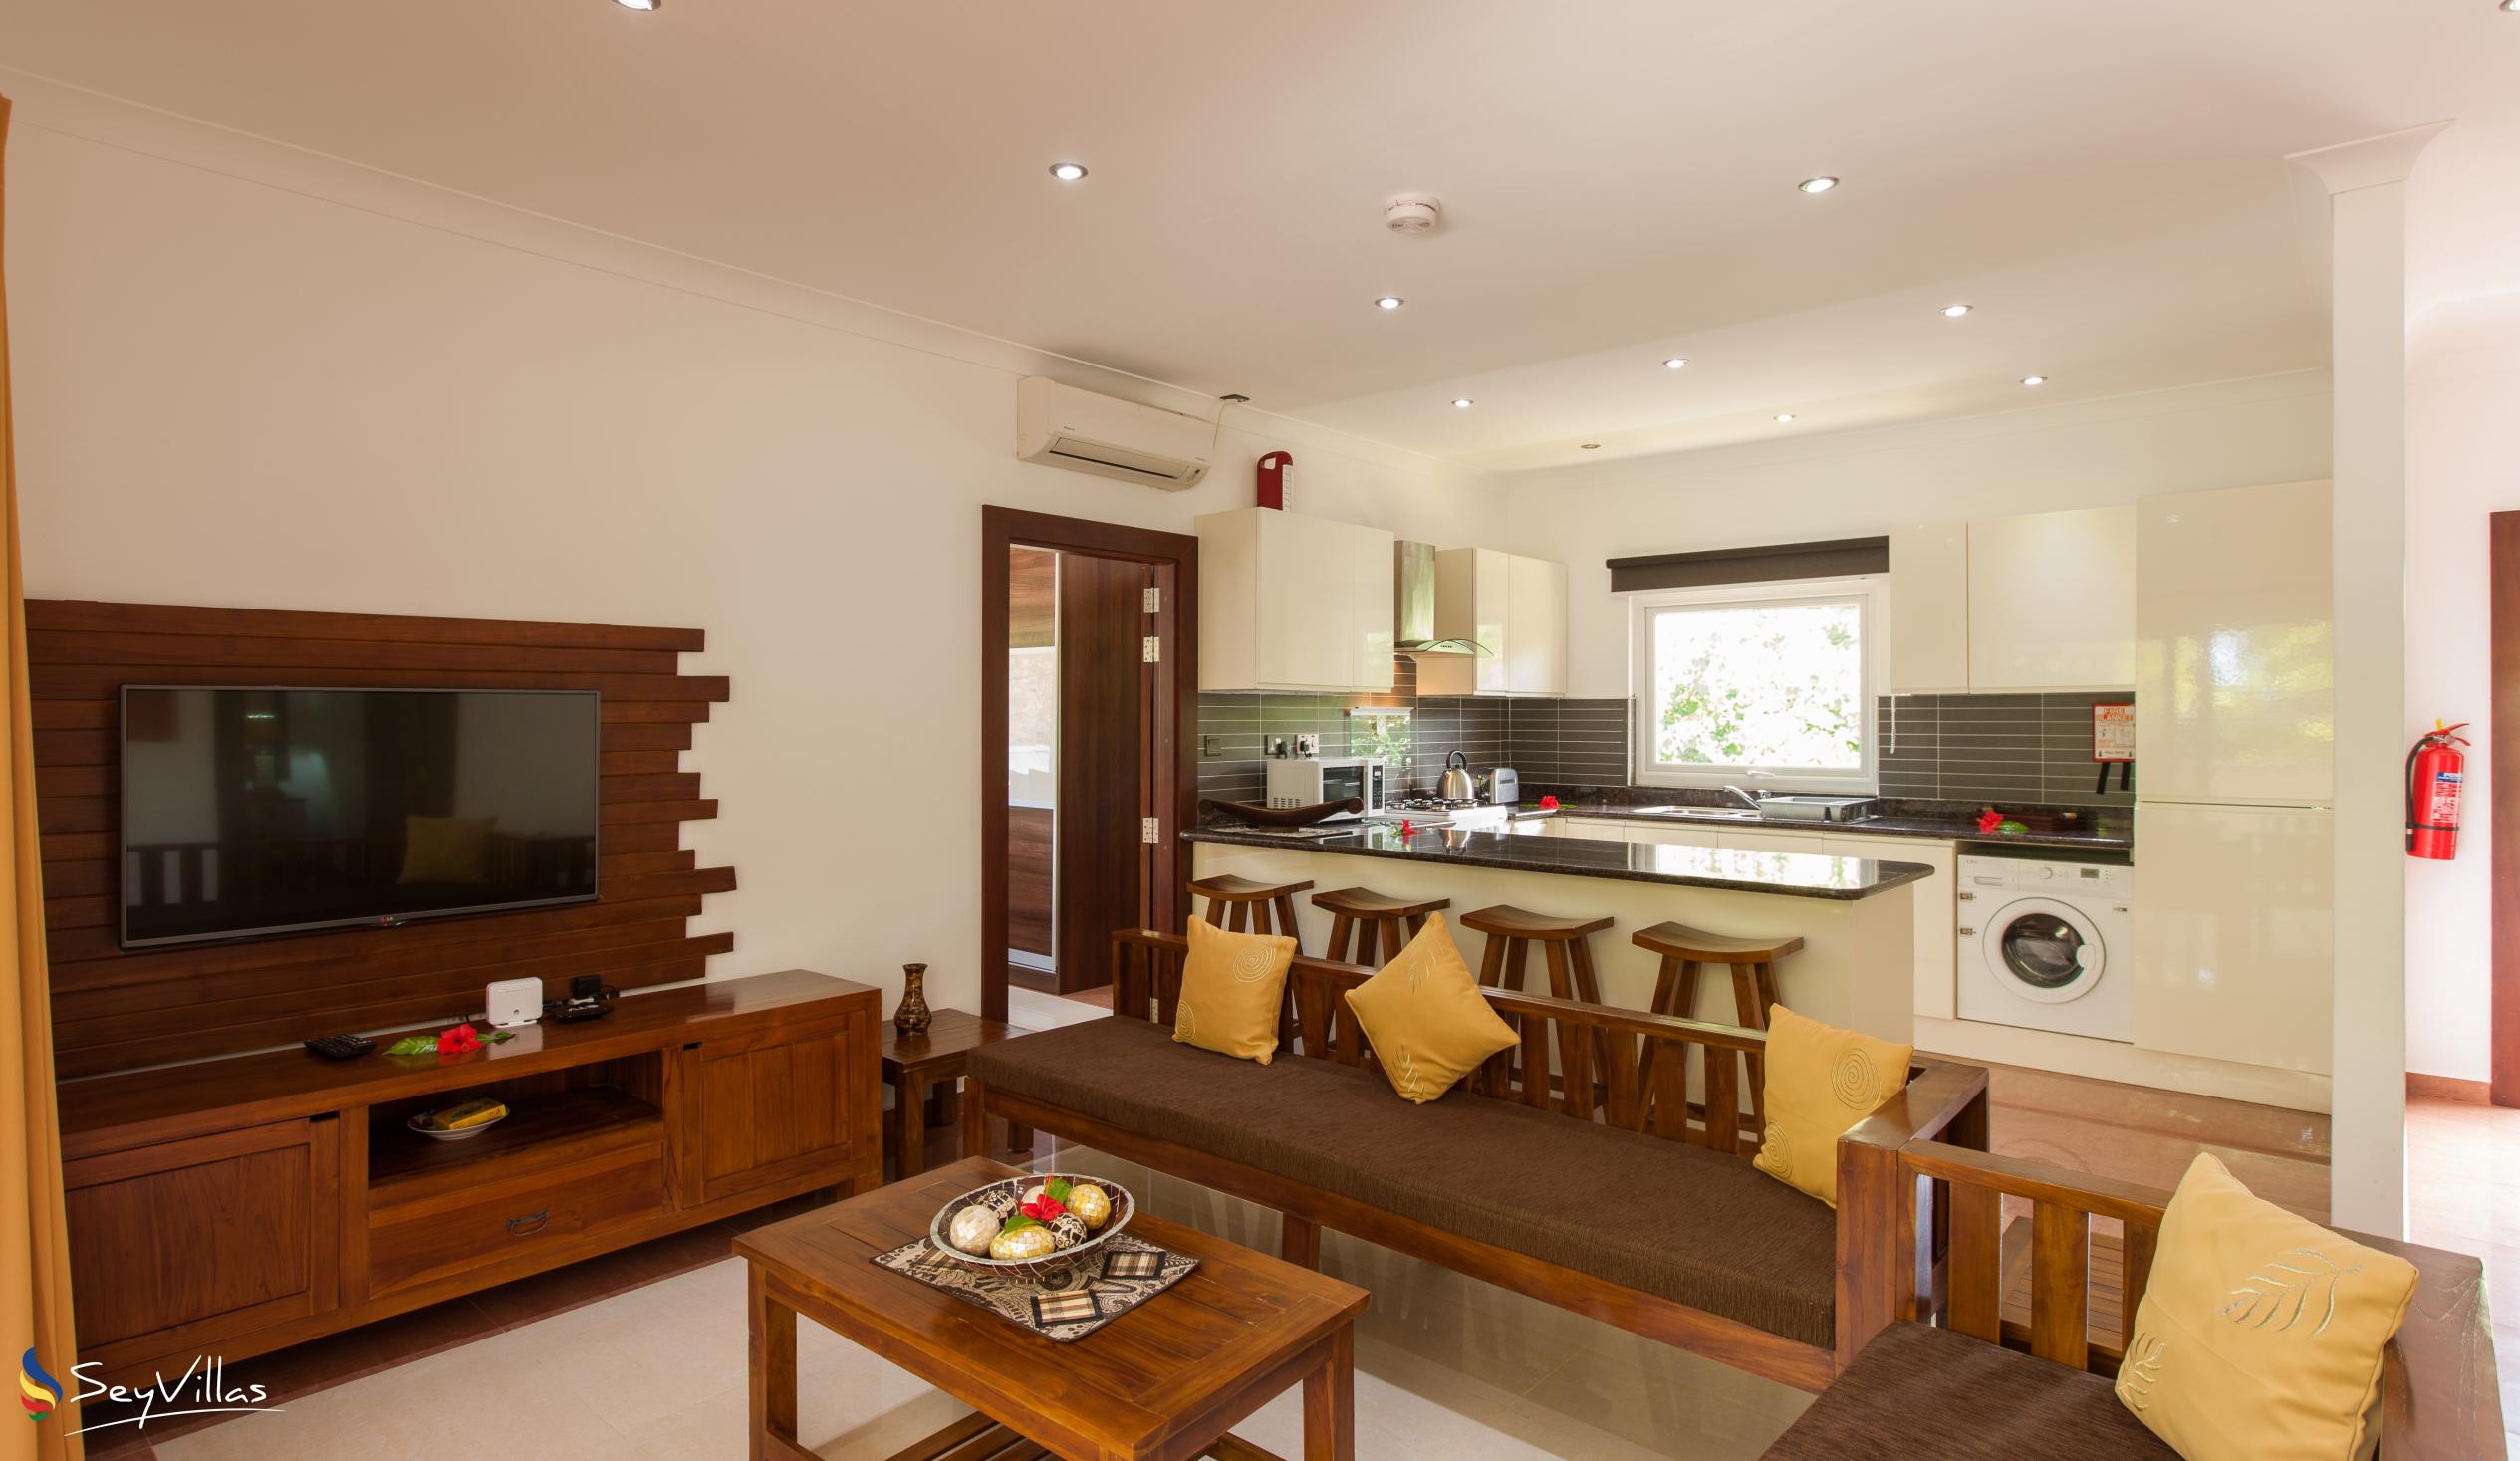 Photo 97: YASAD Luxury Beach Residence - 3-Bedroom Apartment First Floor - Praslin (Seychelles)